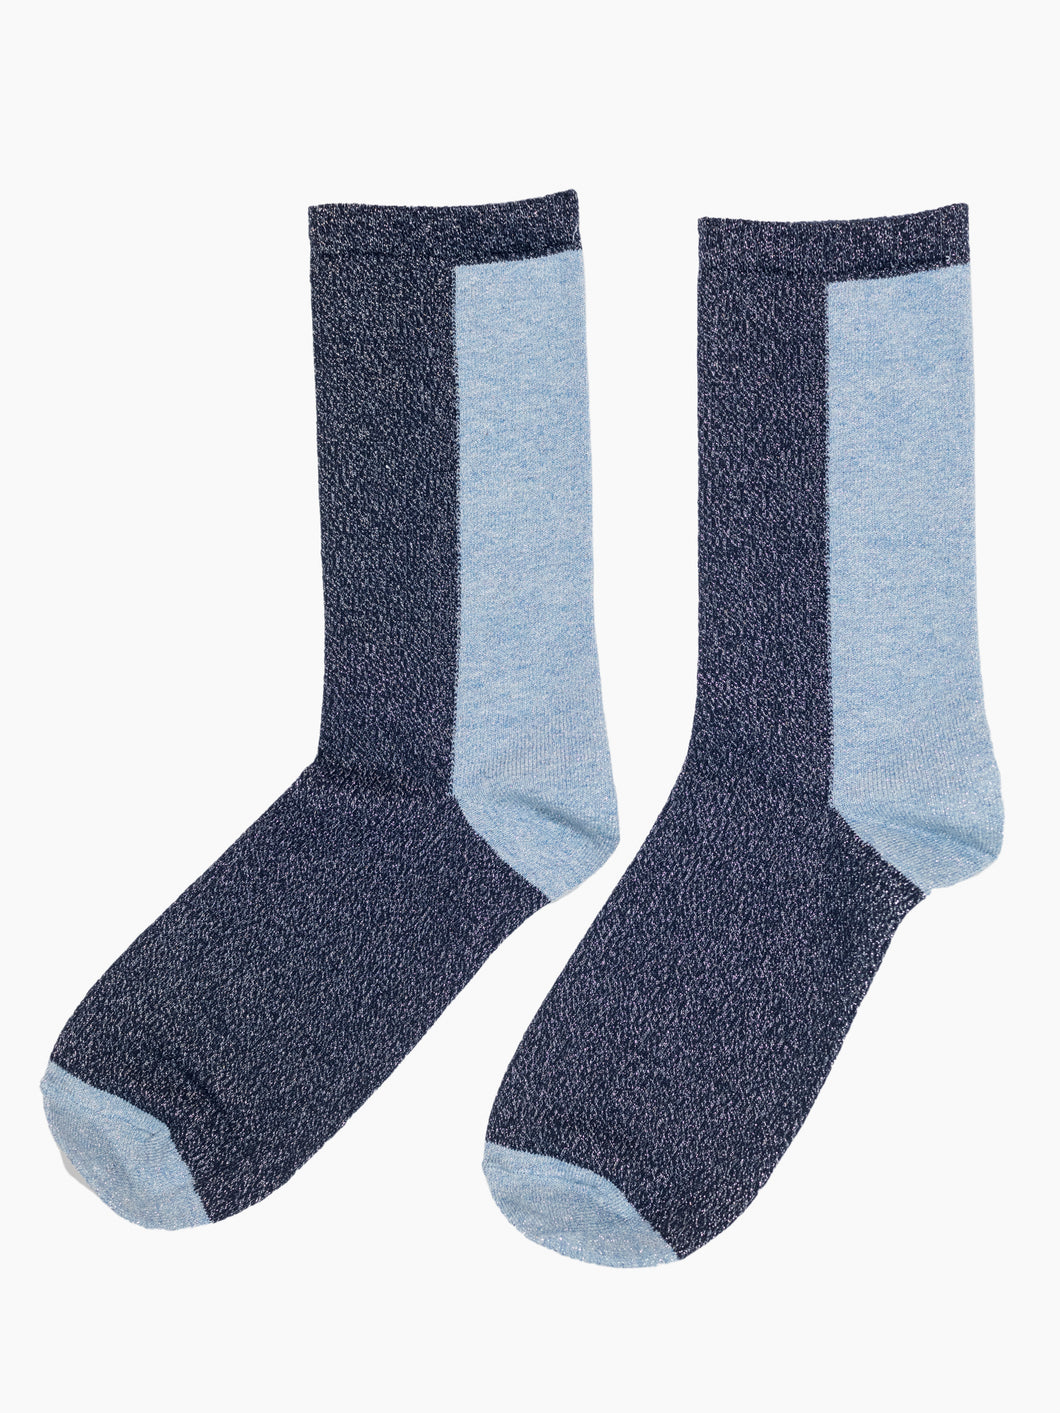 Two-Tone Sapphire Socks